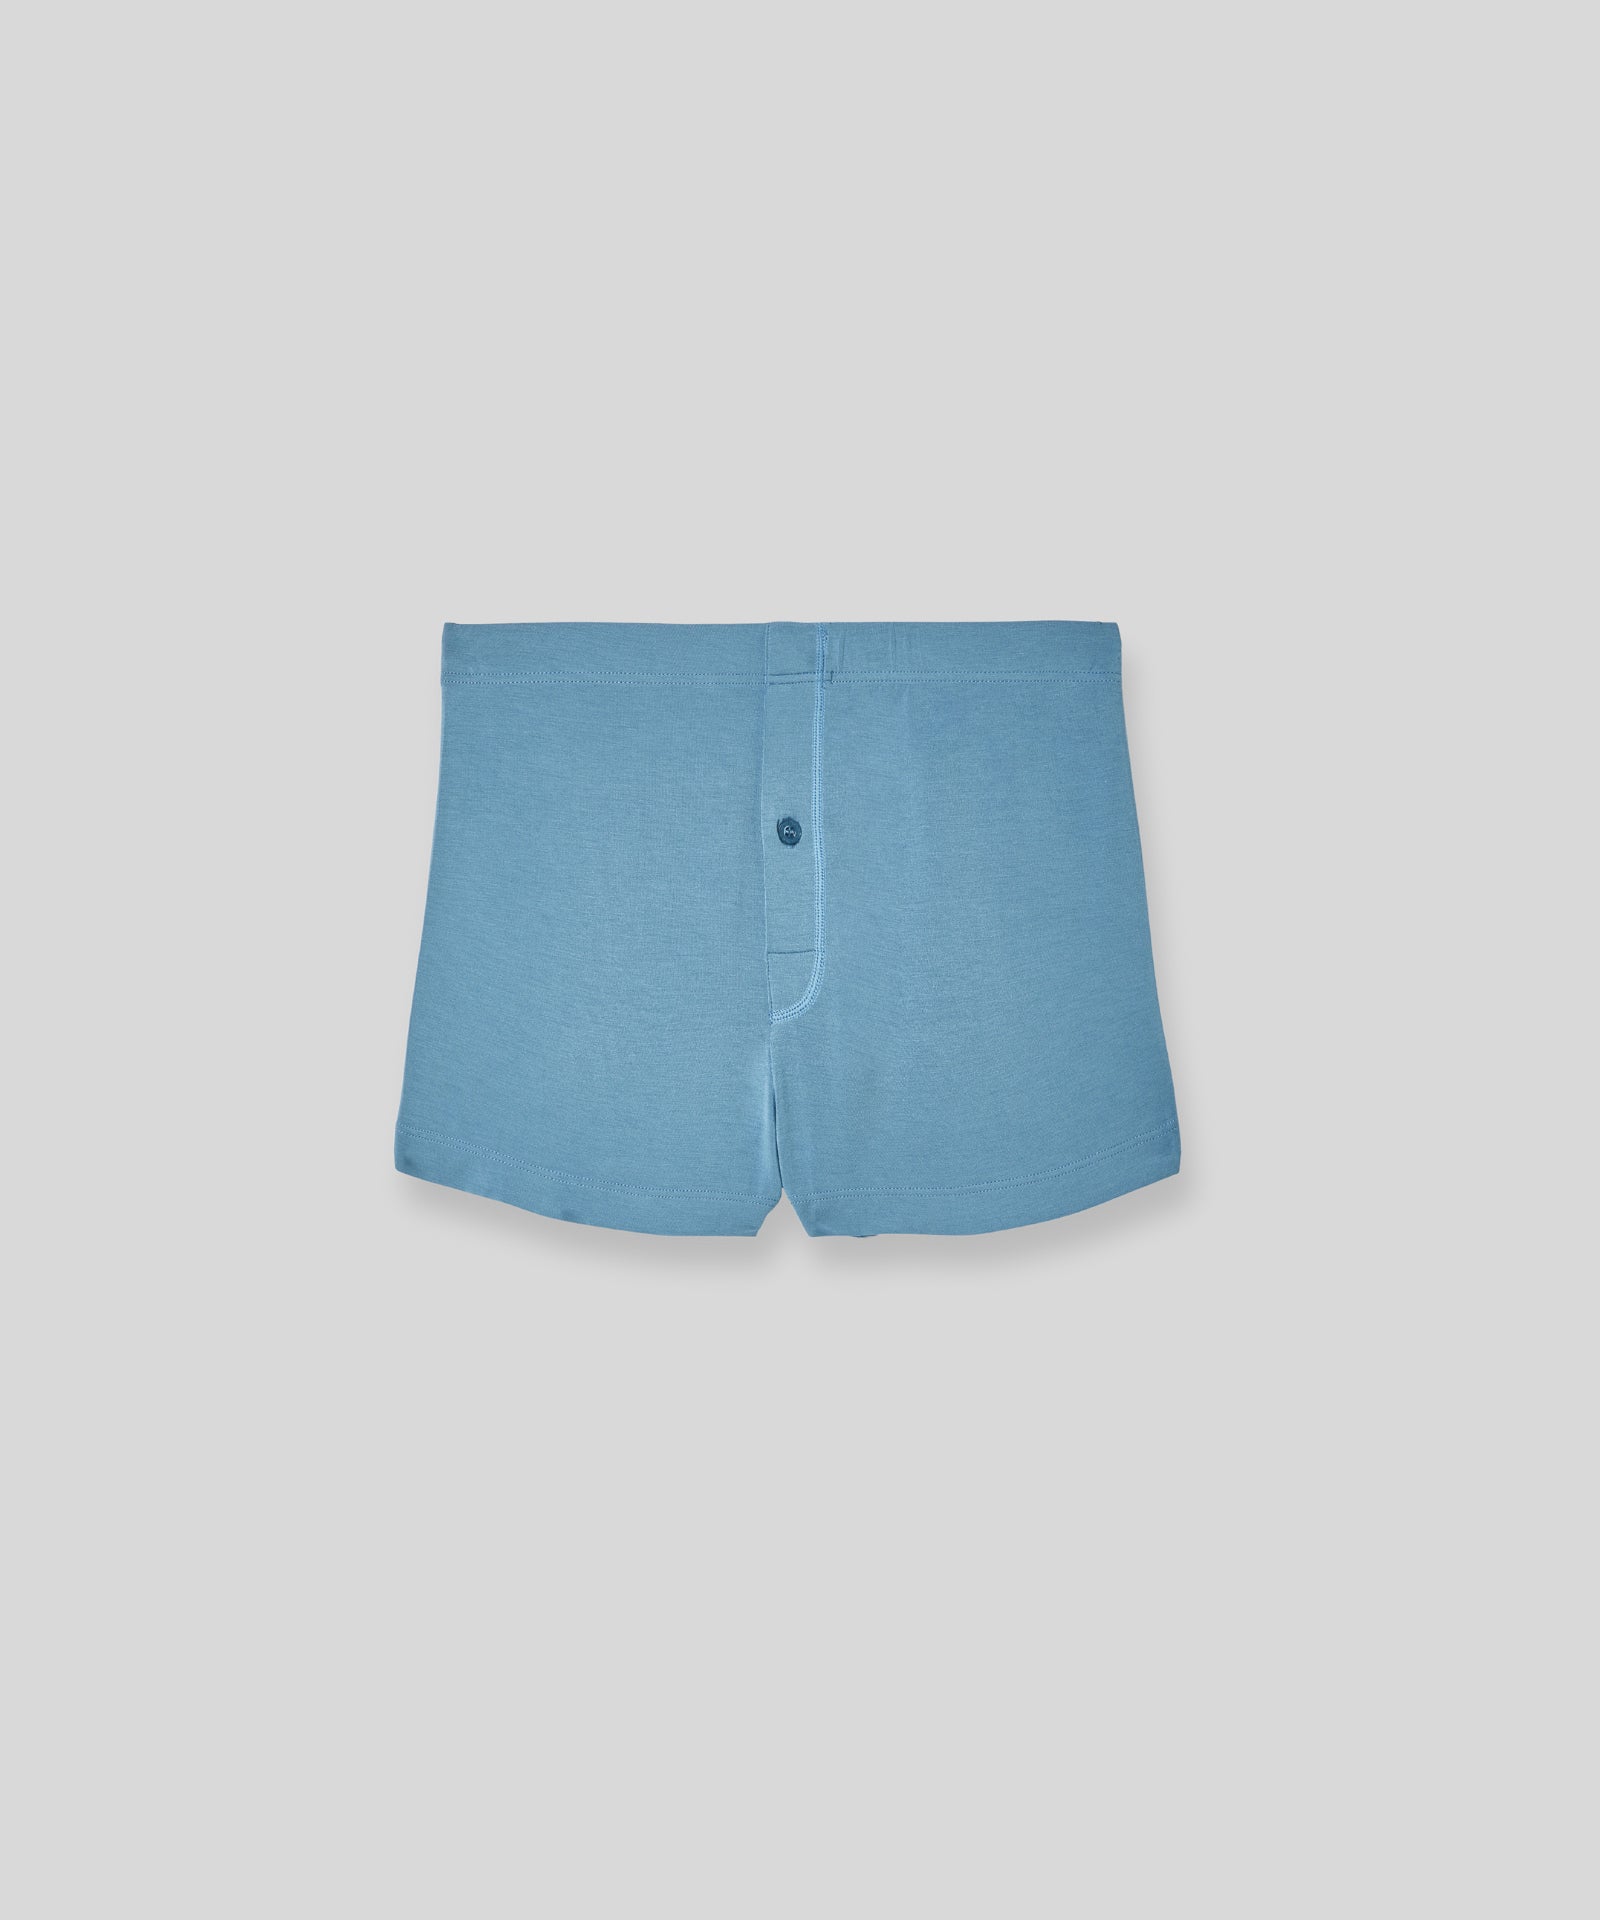 SilkCut Slim Modal-Boxers for Men in Blue Color